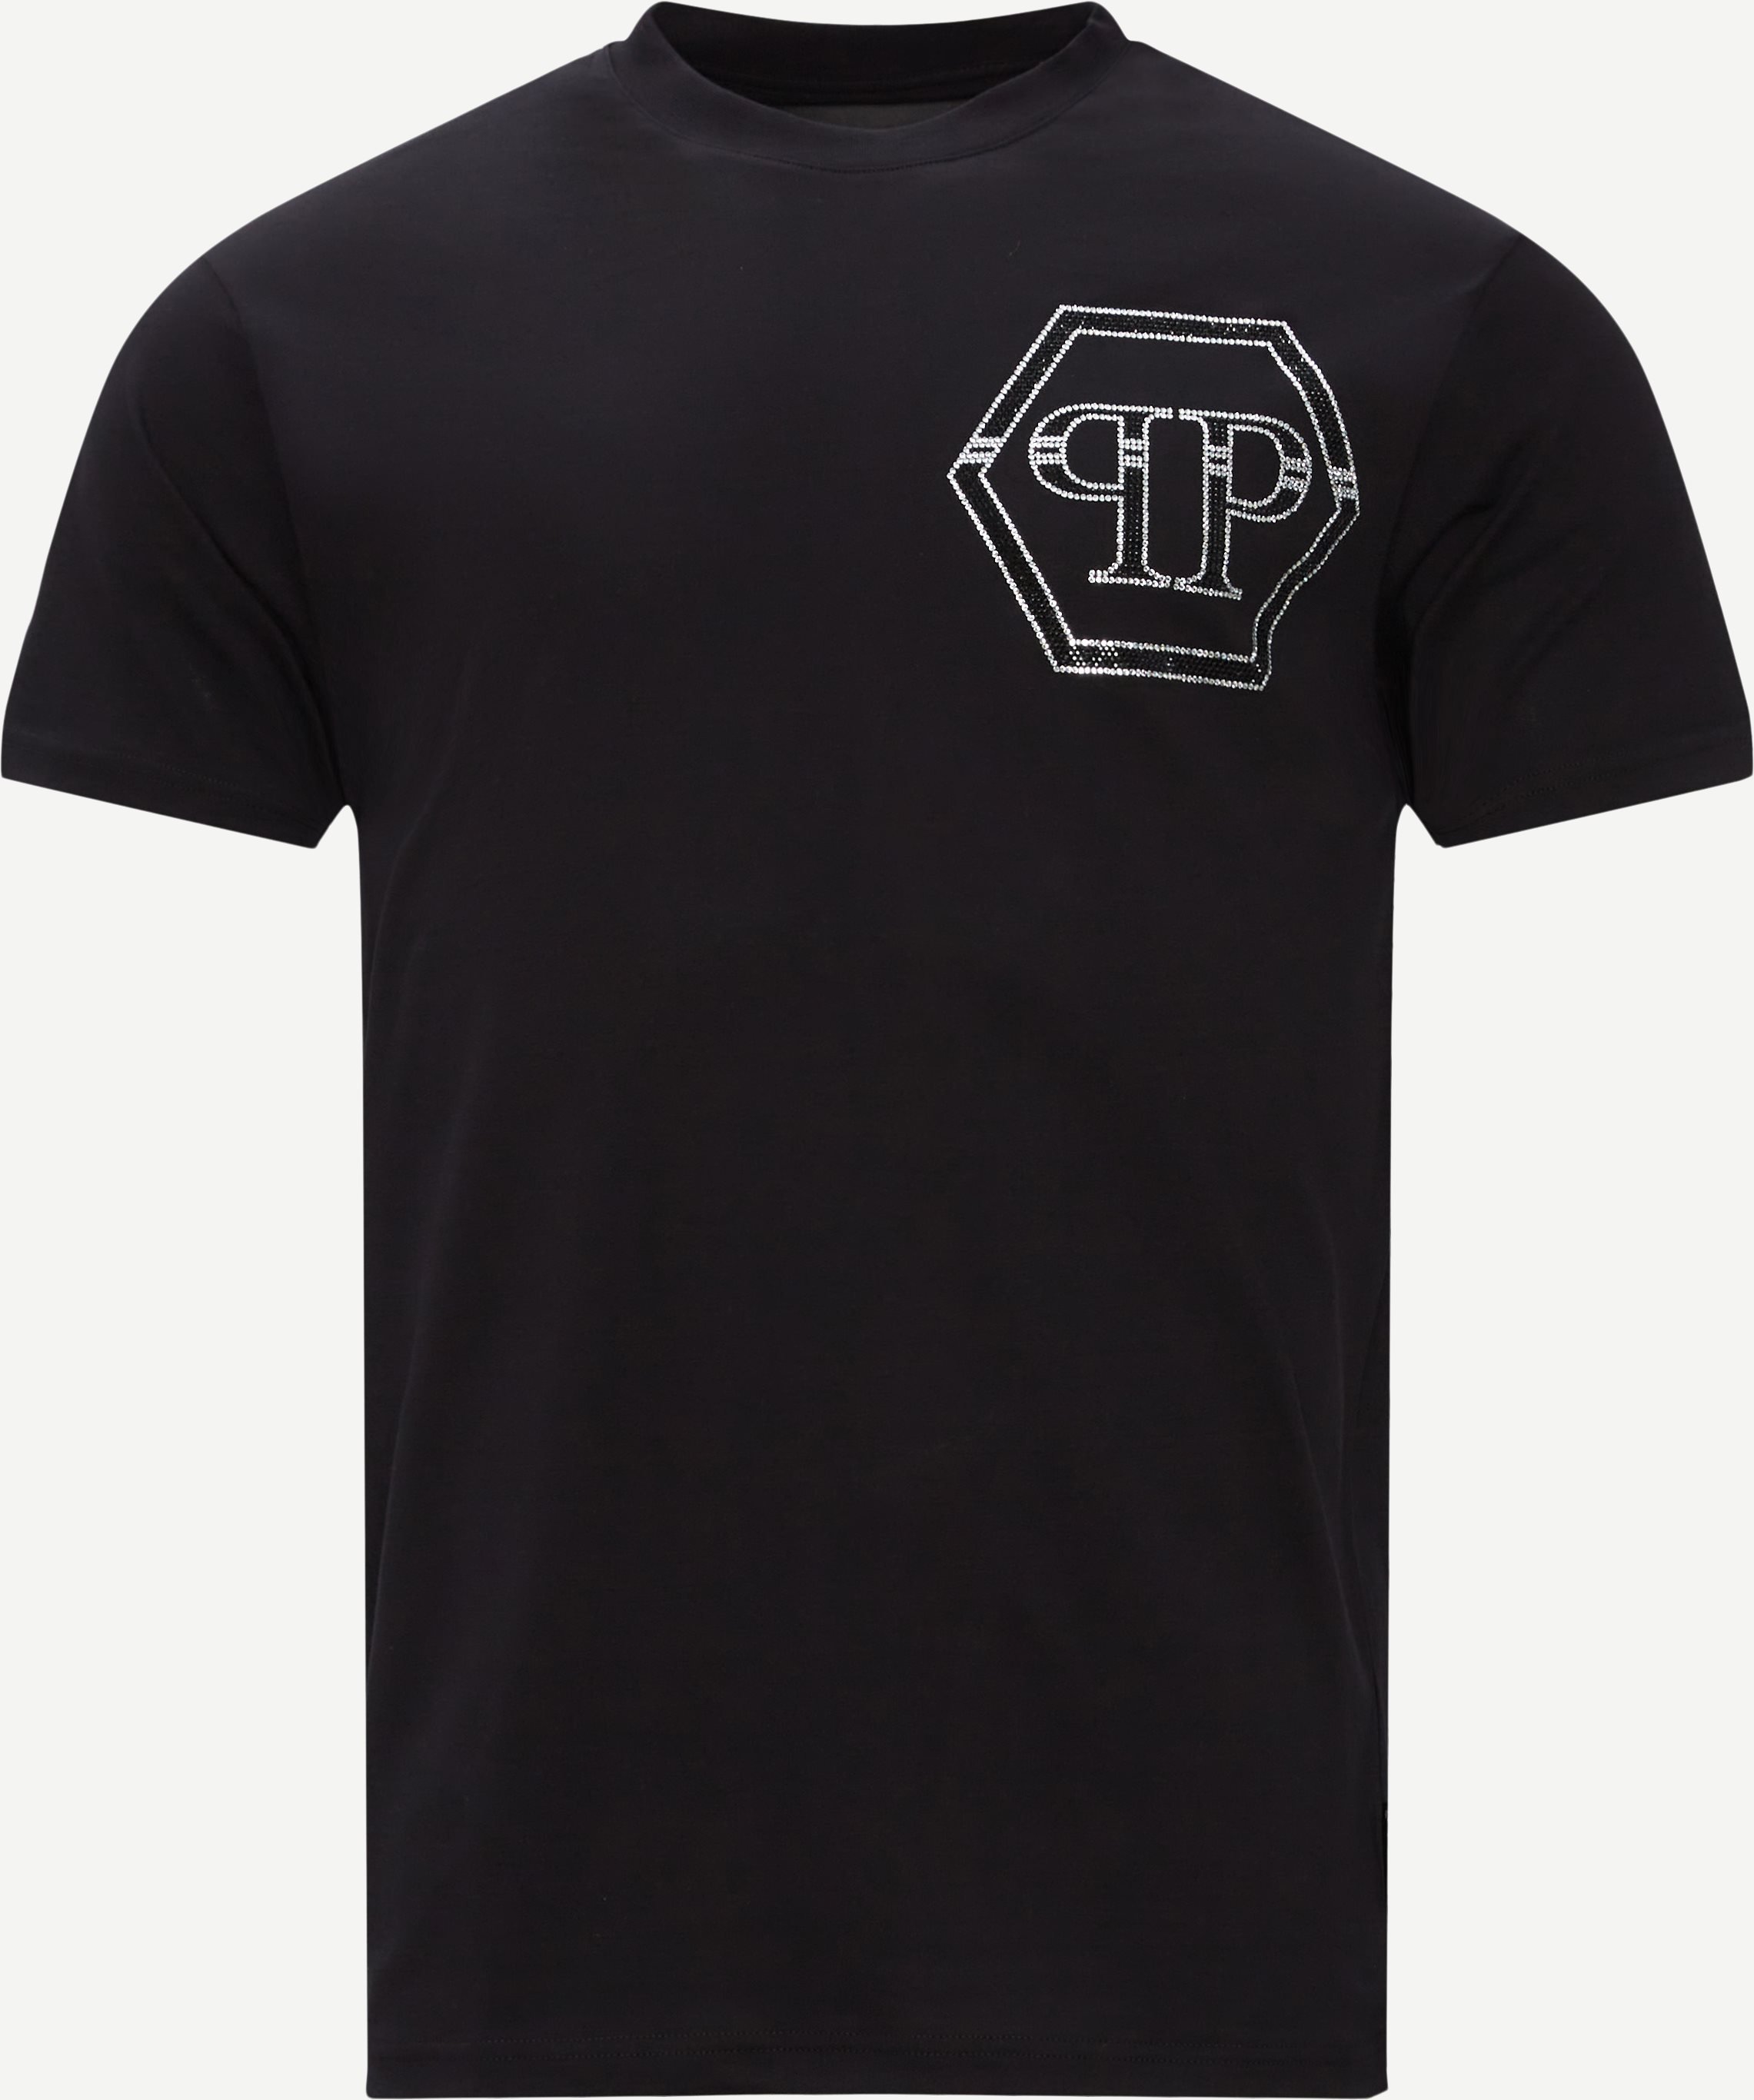 MTK5460 Hexagon Tee - T-shirts - Regular fit - Sort